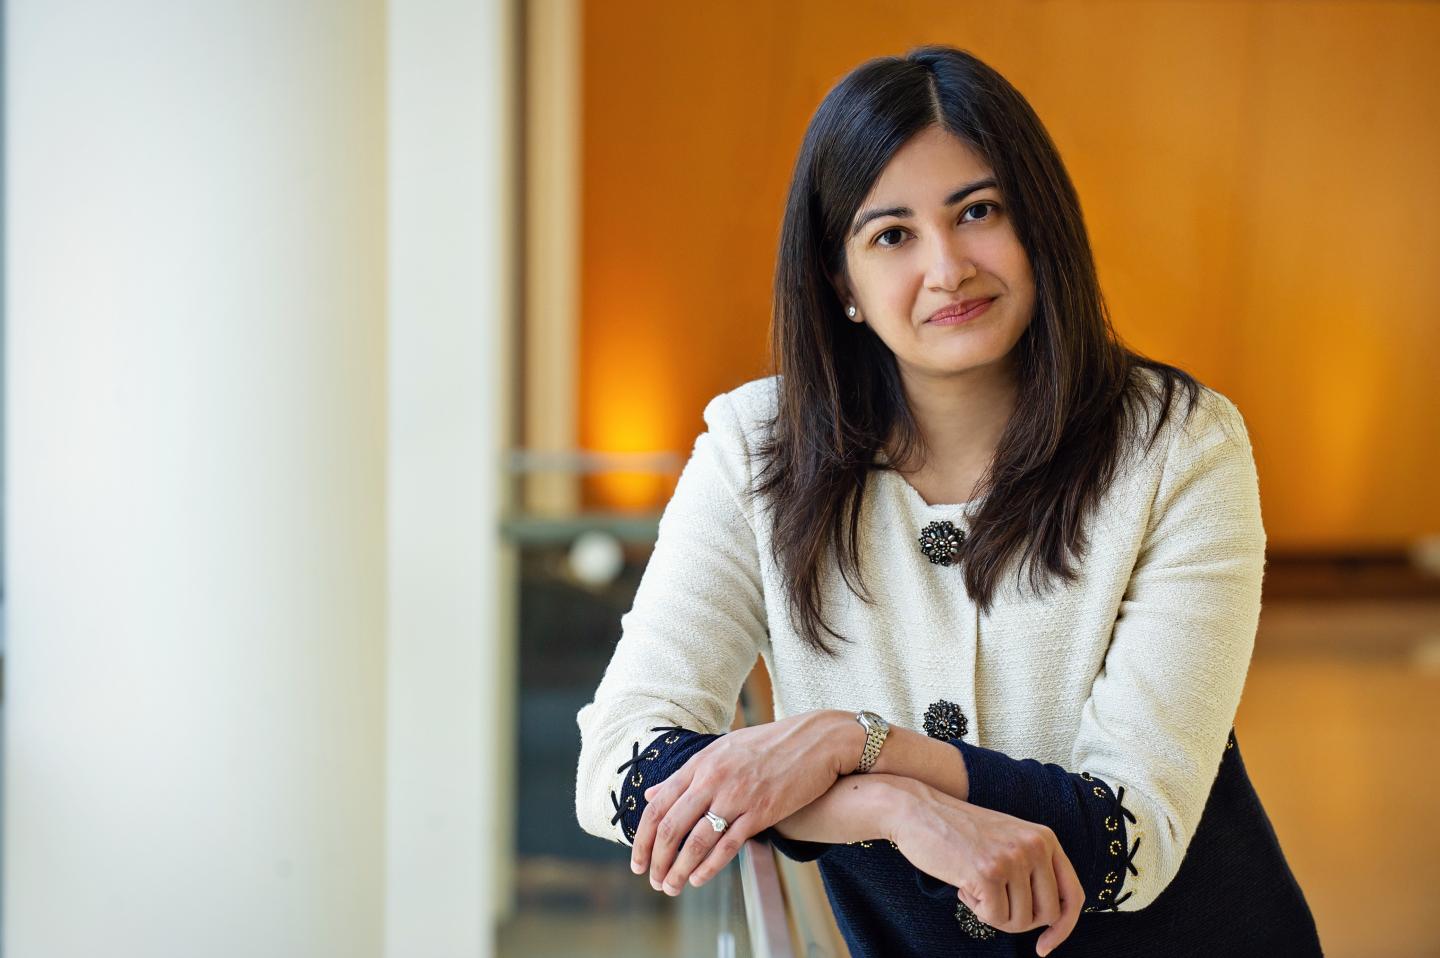 Reshma Jagsi, M.D., D.Phil, Michigan Medicine - University of Michigan